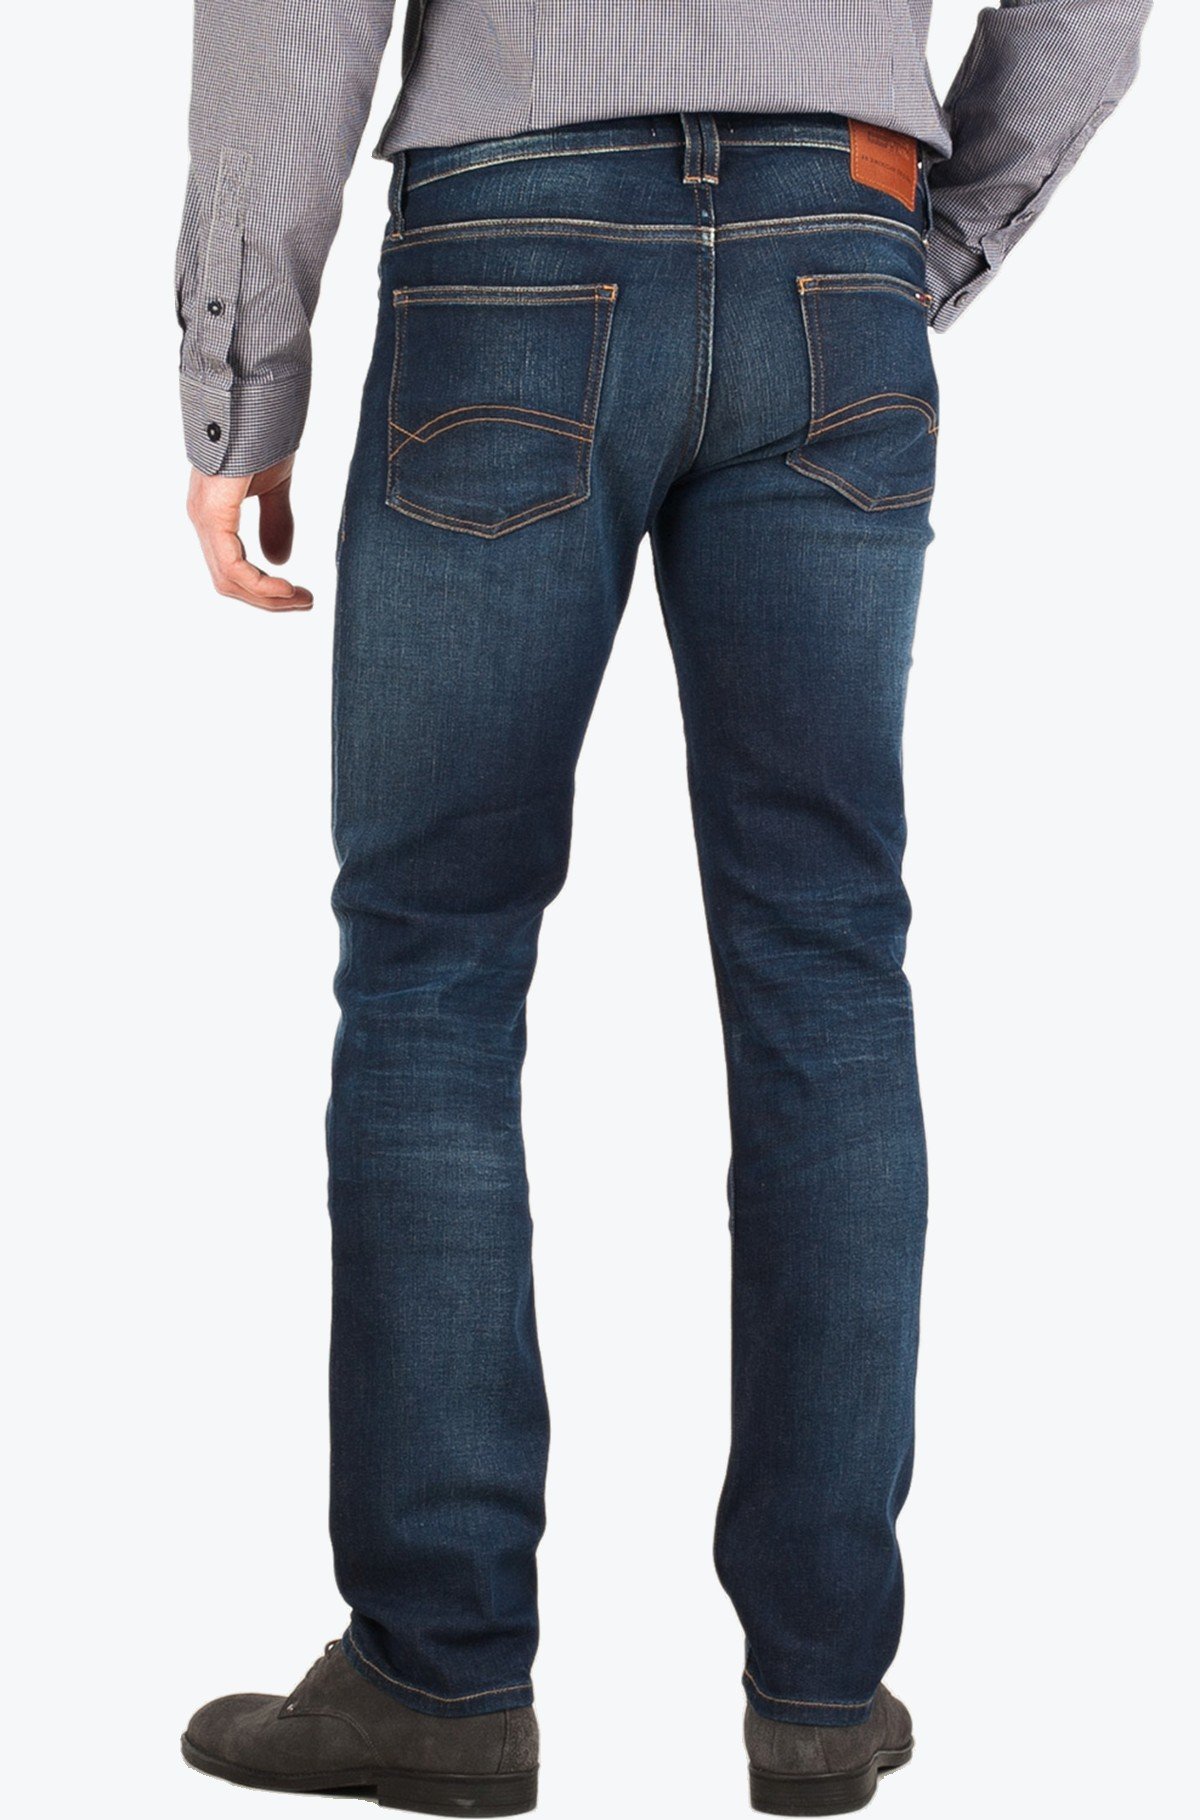 tommy hilfiger original straight ryan jeans